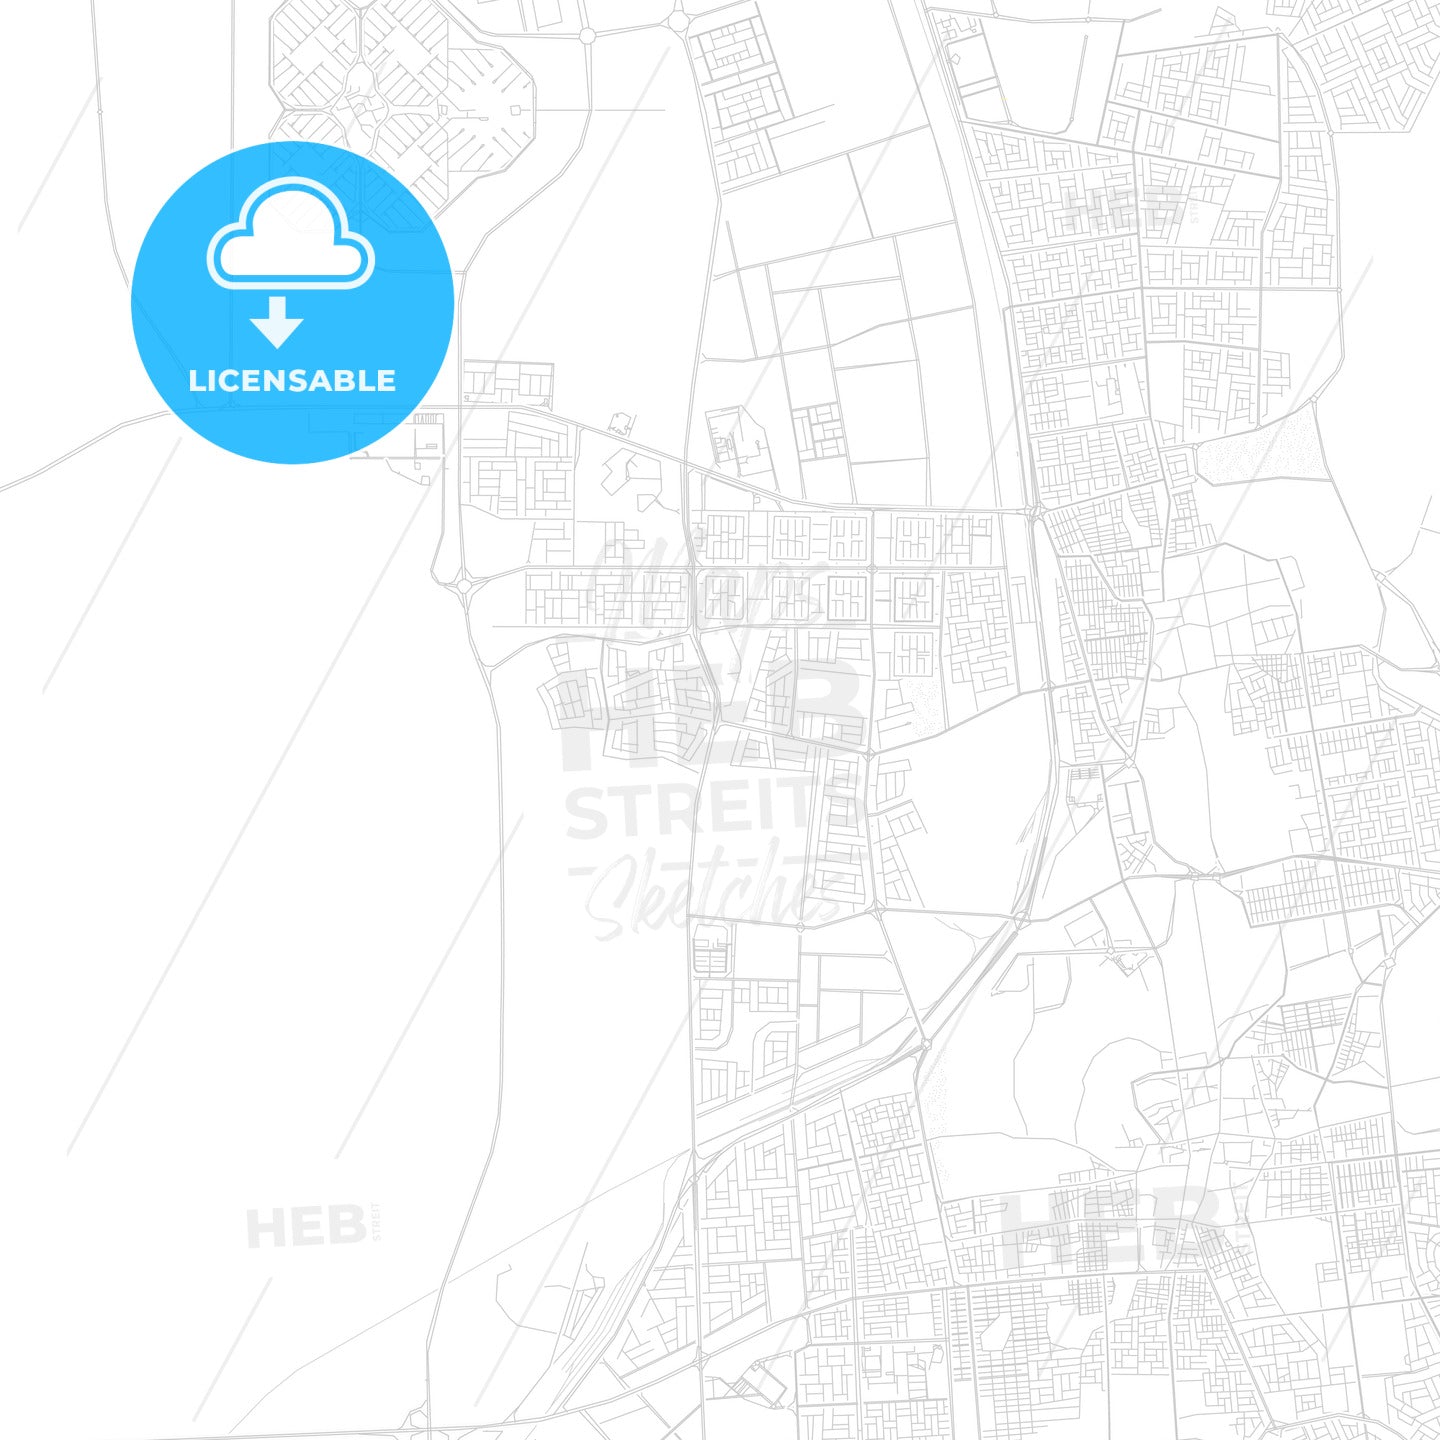 Al-Mubarraz, Saudi Arabia PDF vector map with water in focus